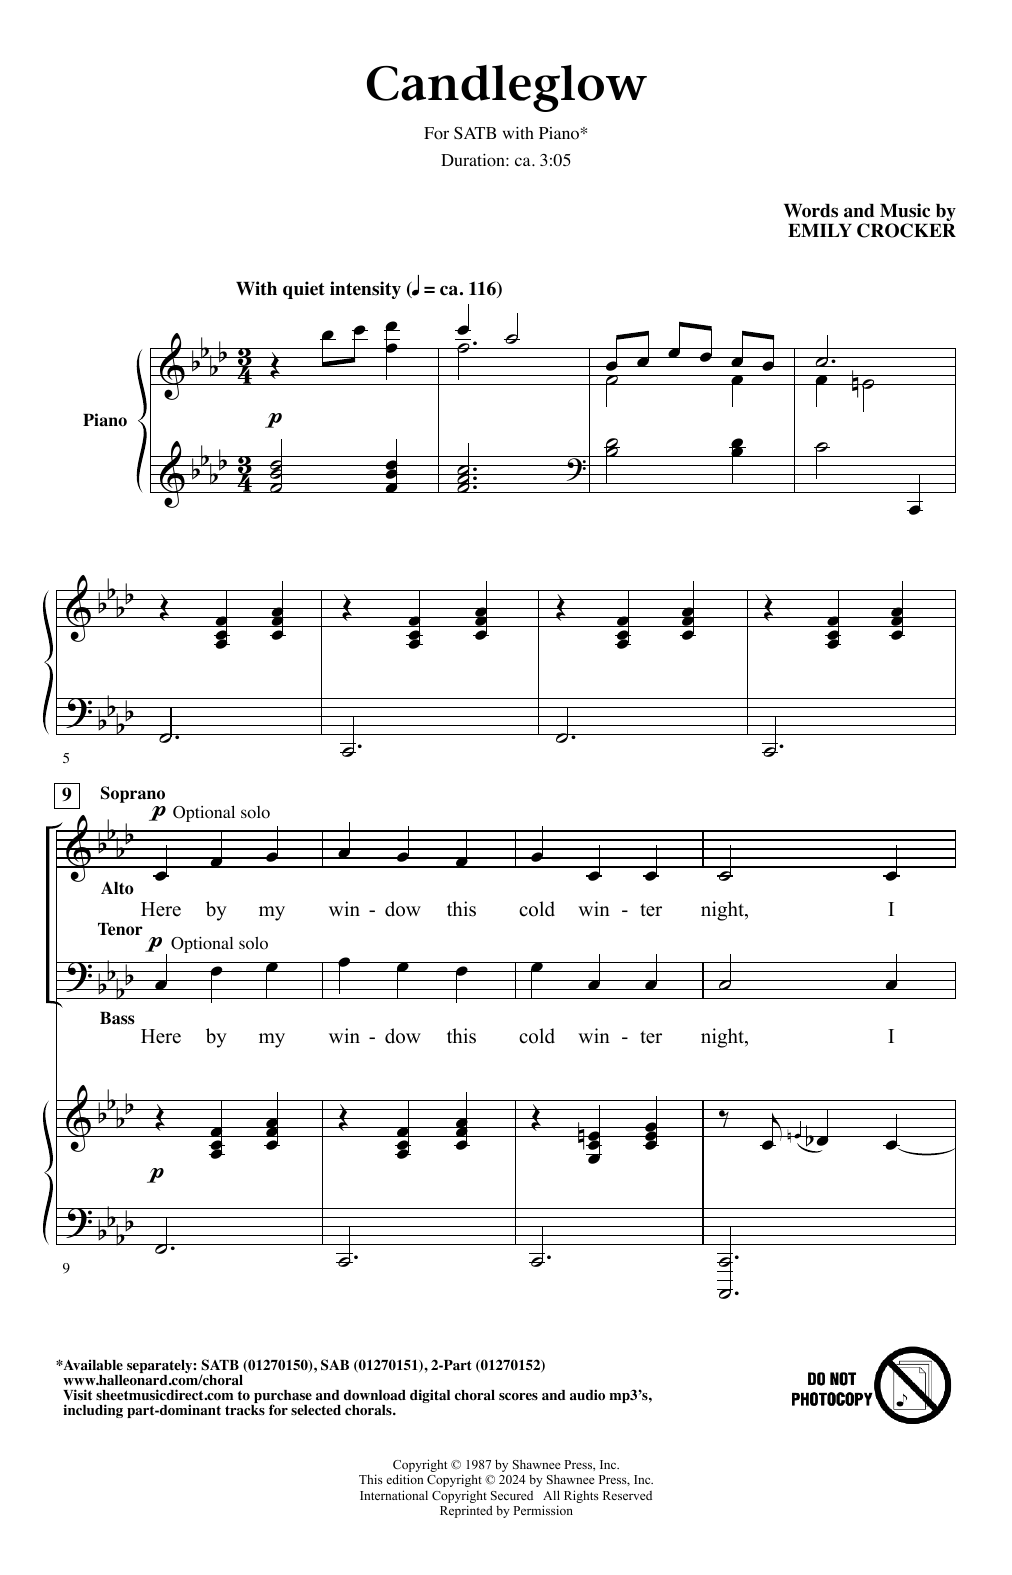 Emily Crocker Candleglow Sheet Music Notes & Chords for SAB Choir - Download or Print PDF